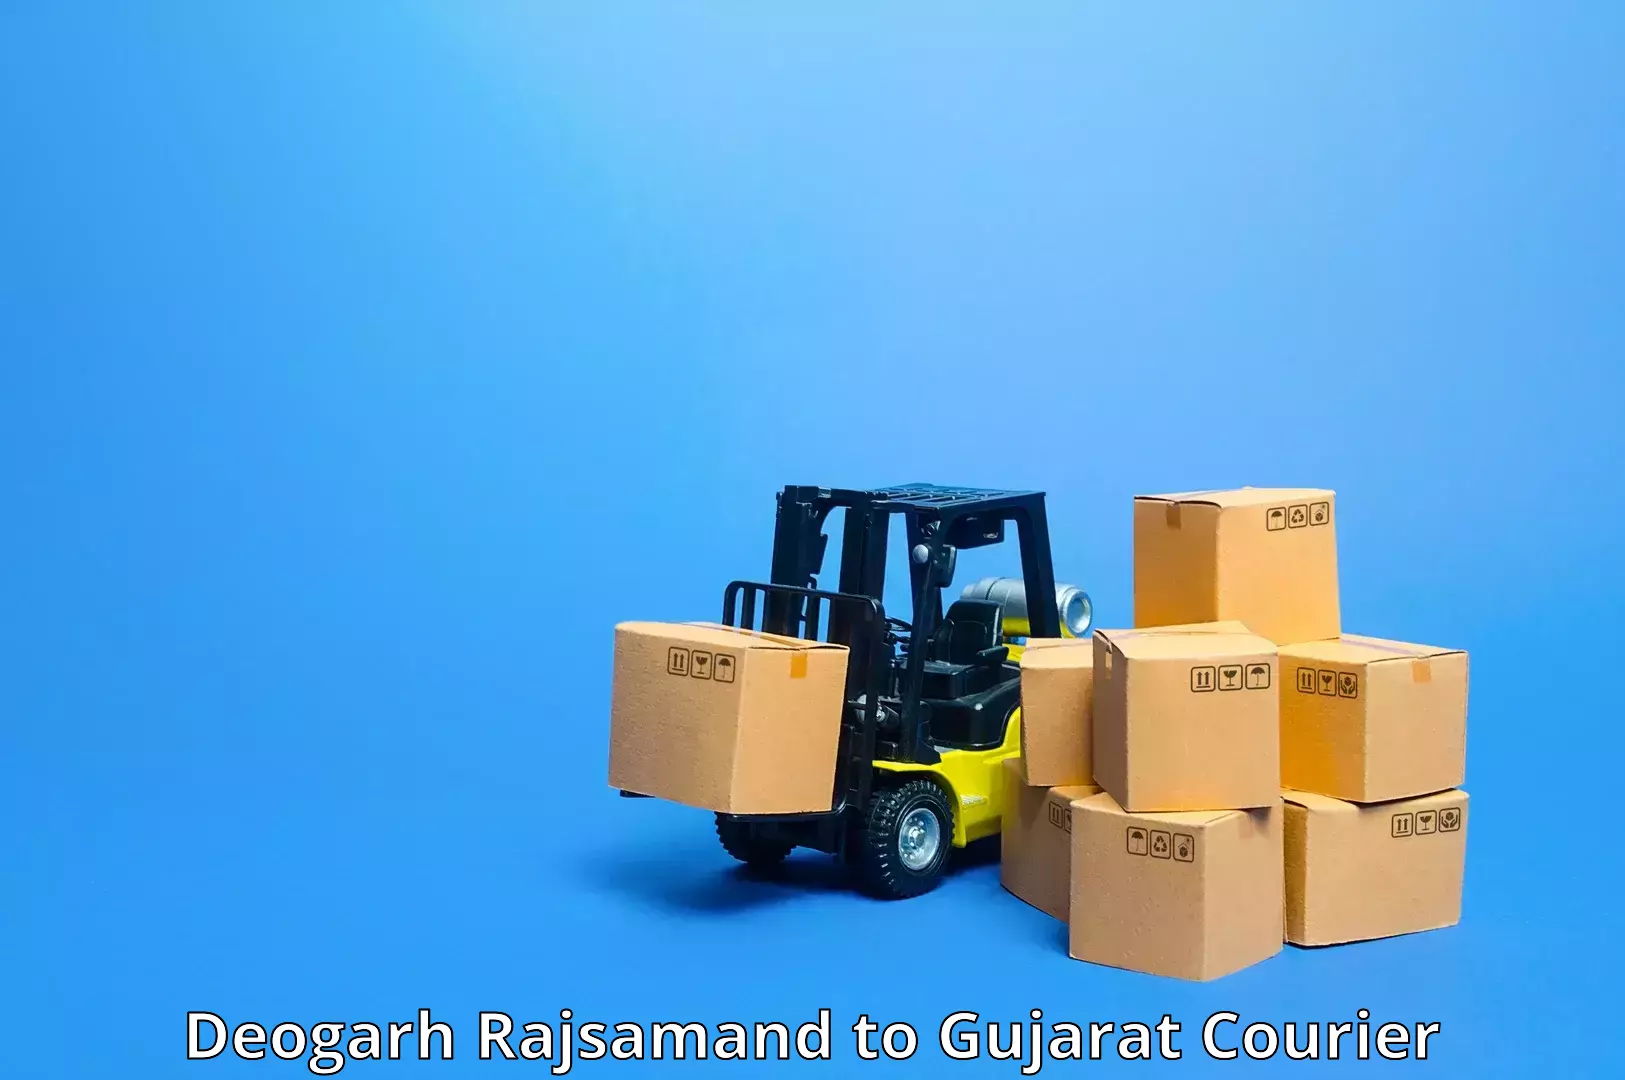 Reliable shipping partners Deogarh Rajsamand to Gandhinagar